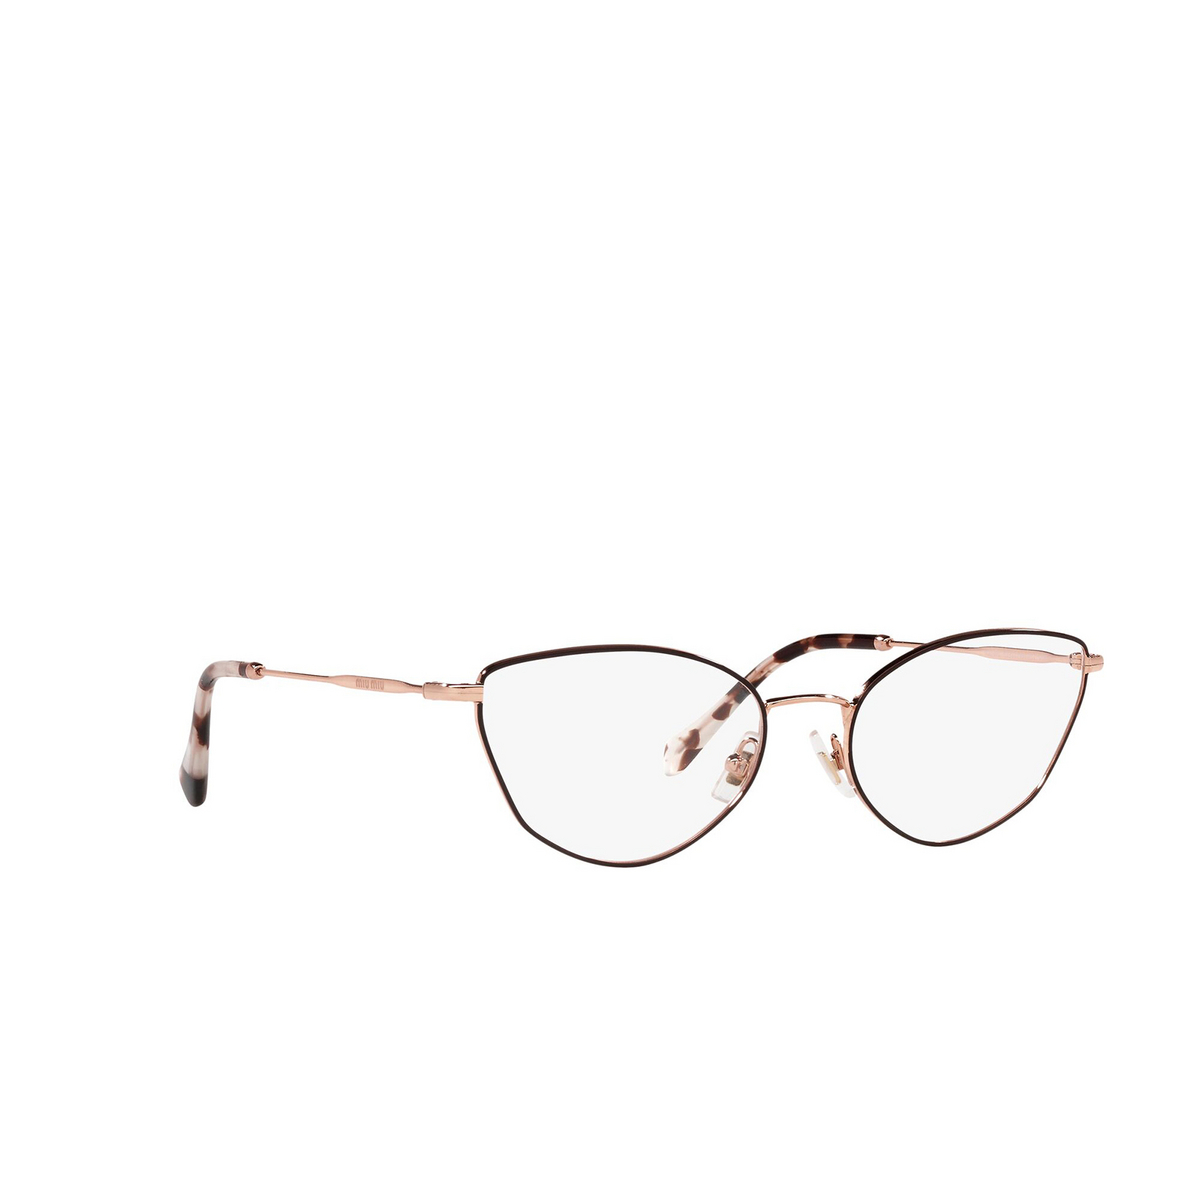 Miu Miu® Cat-eye Eyeglasses: MU 51SV color Brown 3311O1 - three-quarters view.